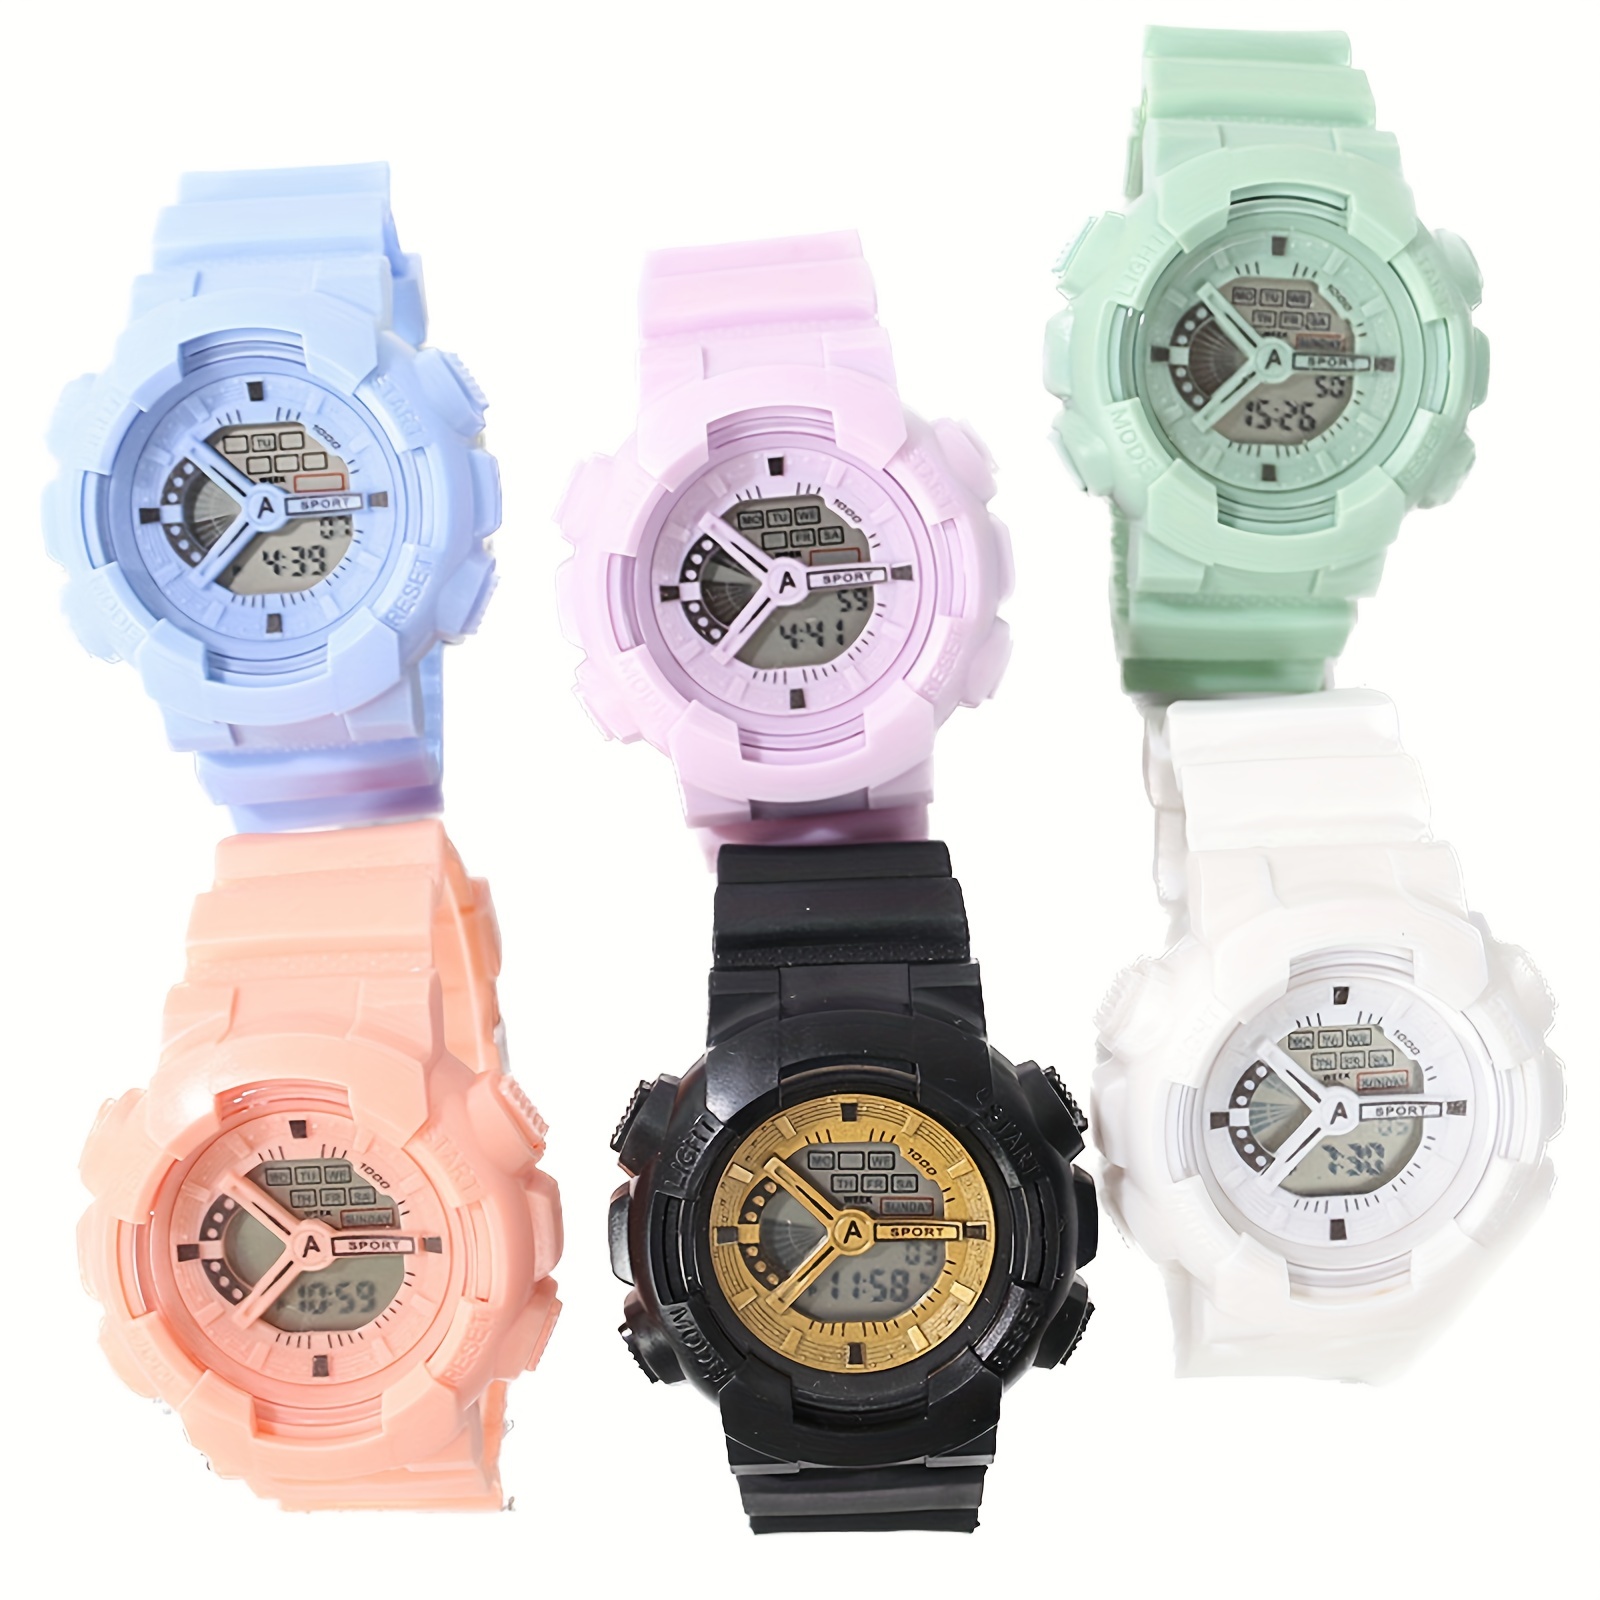 Reloj Para Niños Deportes De Moda Reloj Digital LED Reloj Para Mujeres Y Niñas Reloj Electrónico A Prueba De Agua detalles 1